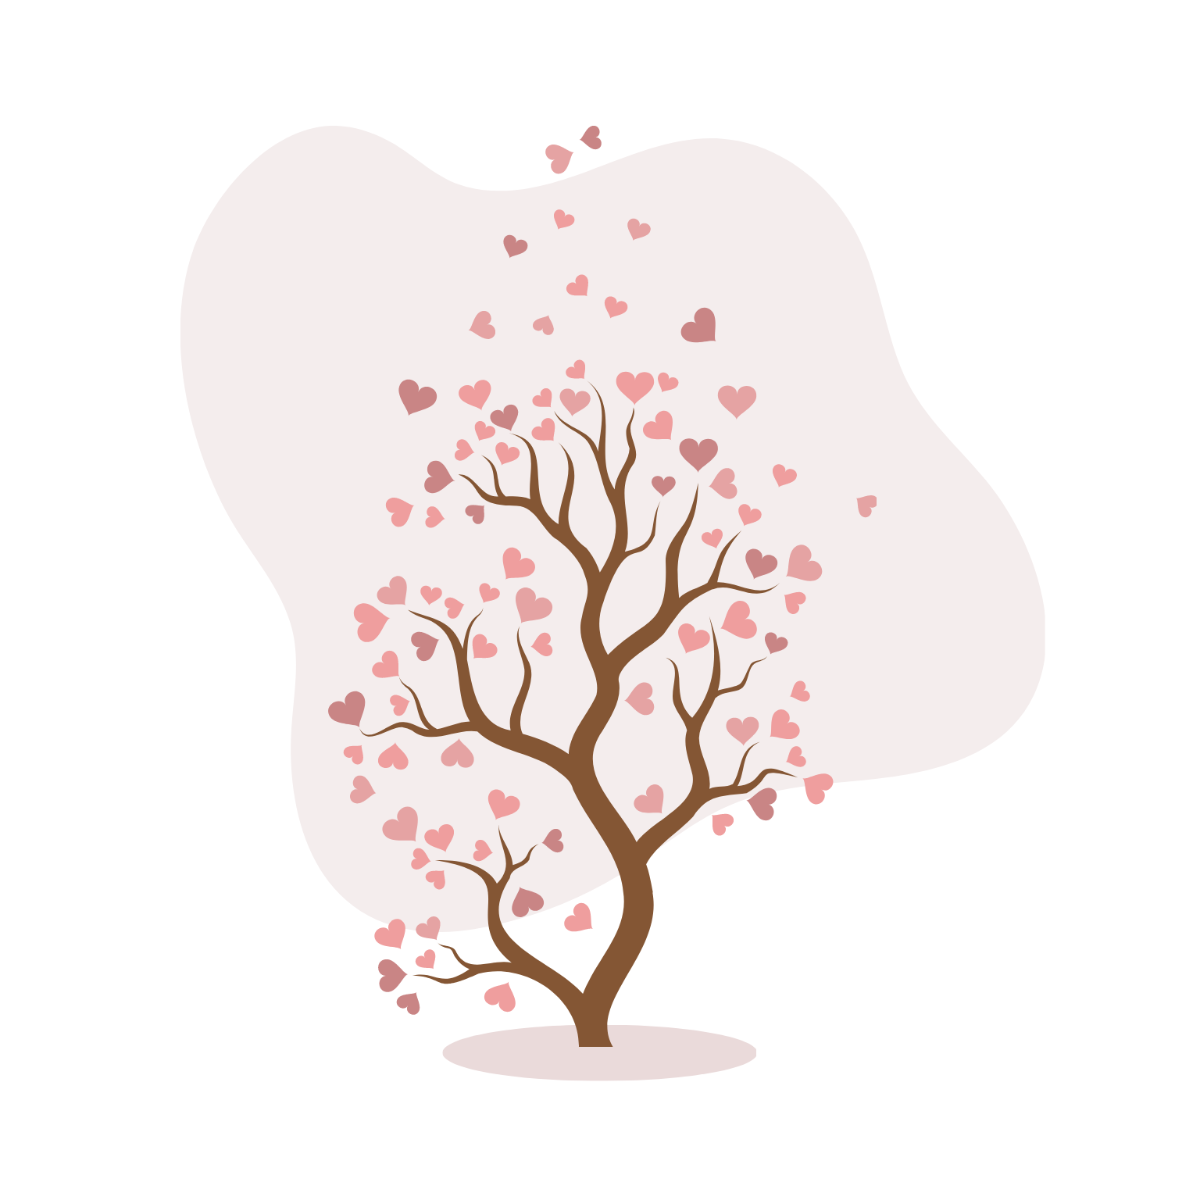 Free Love Tree Vector Template